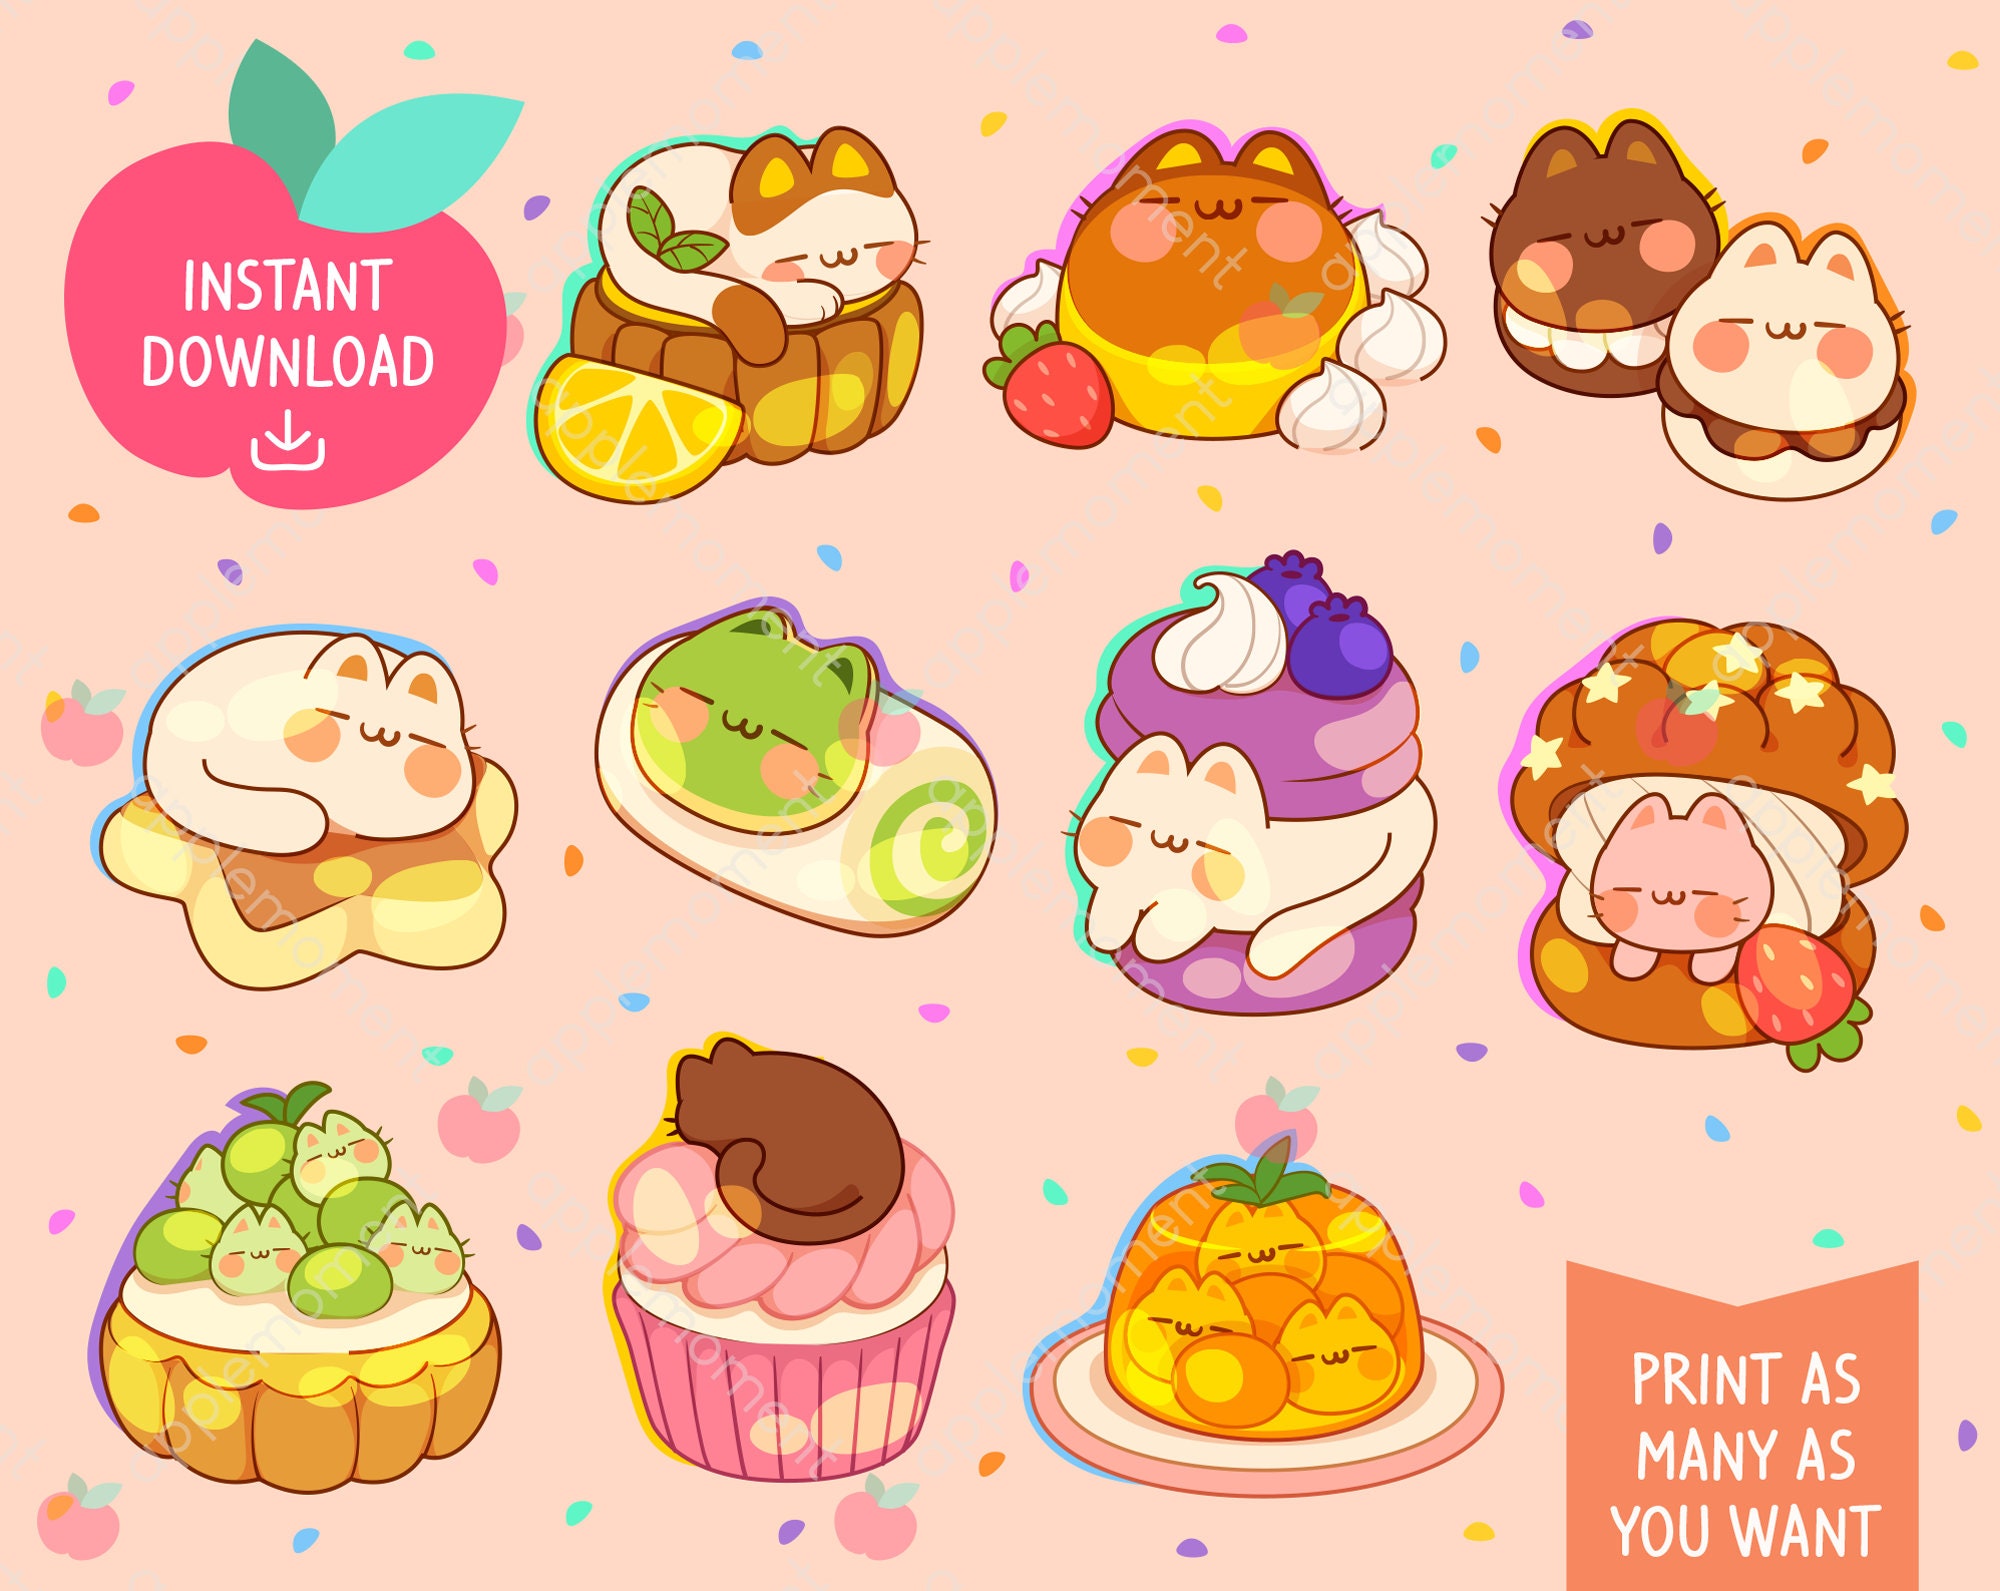 Cute Cupcake PNG Stickers, Kawaii Cupcake PNG Printable Sticker Pack,  Birthday Cake Dessert Clipart Bundle, Instant Digital Sticker Download 